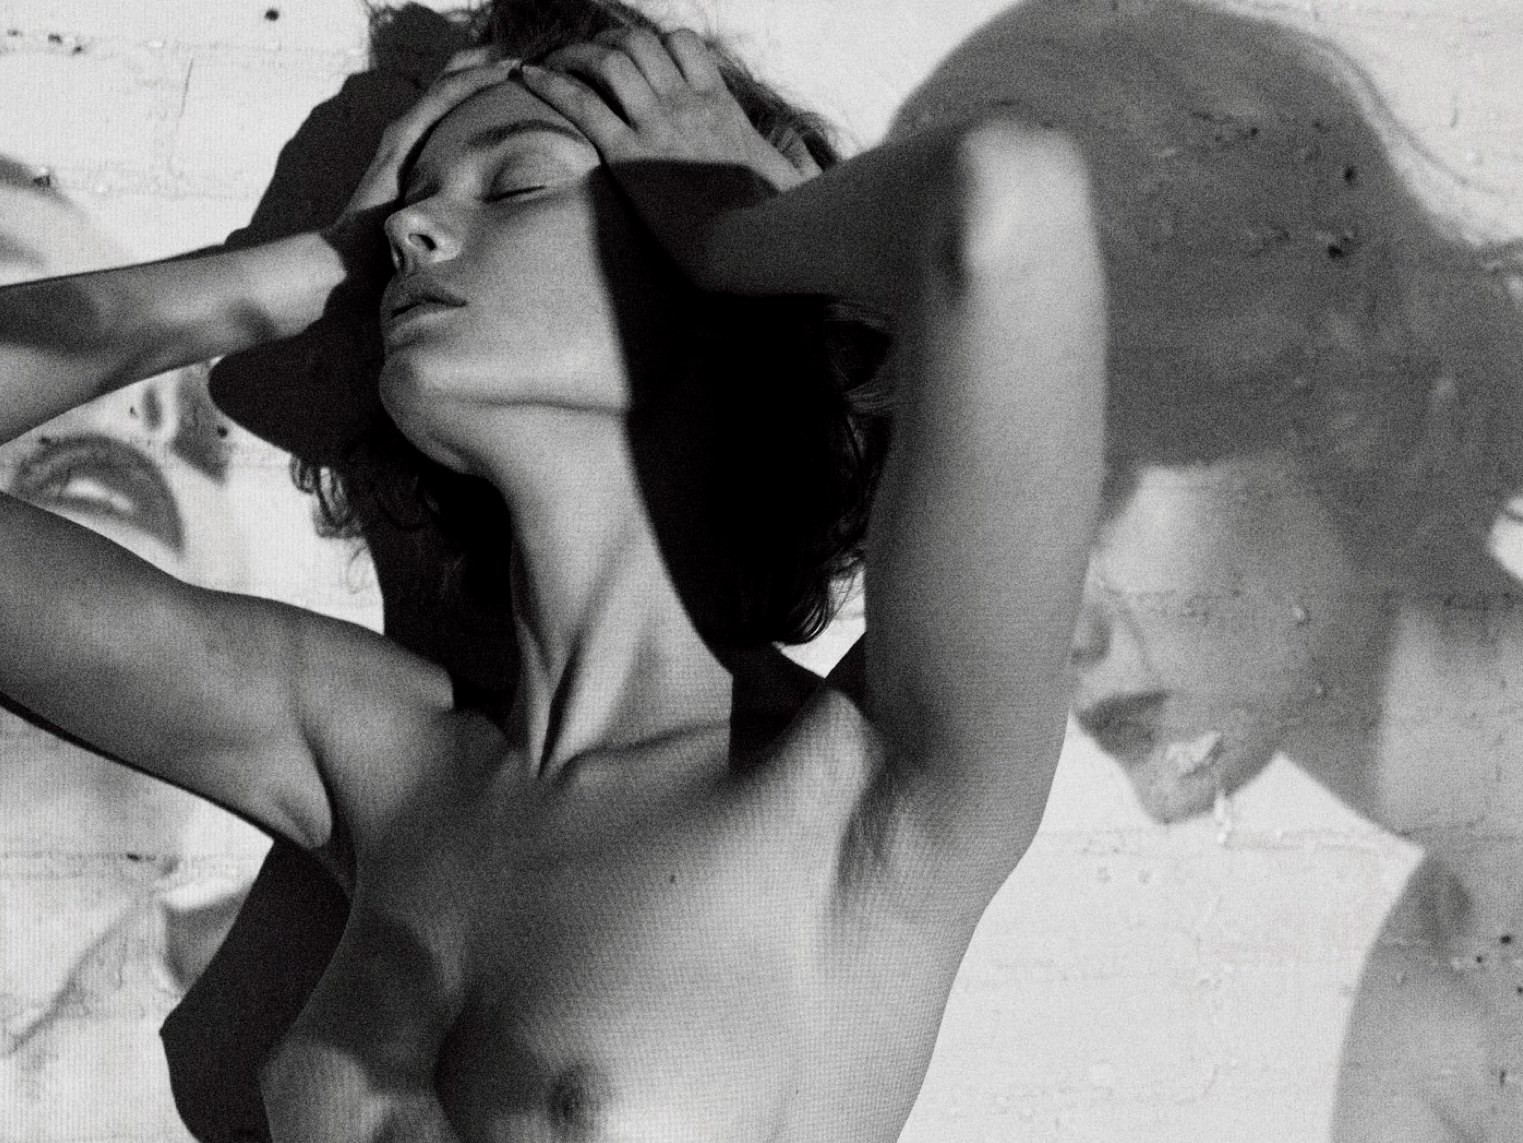 Monika jagaciak völlig nackt in einem johan lindeberg photoshoot 2015
 #75160673